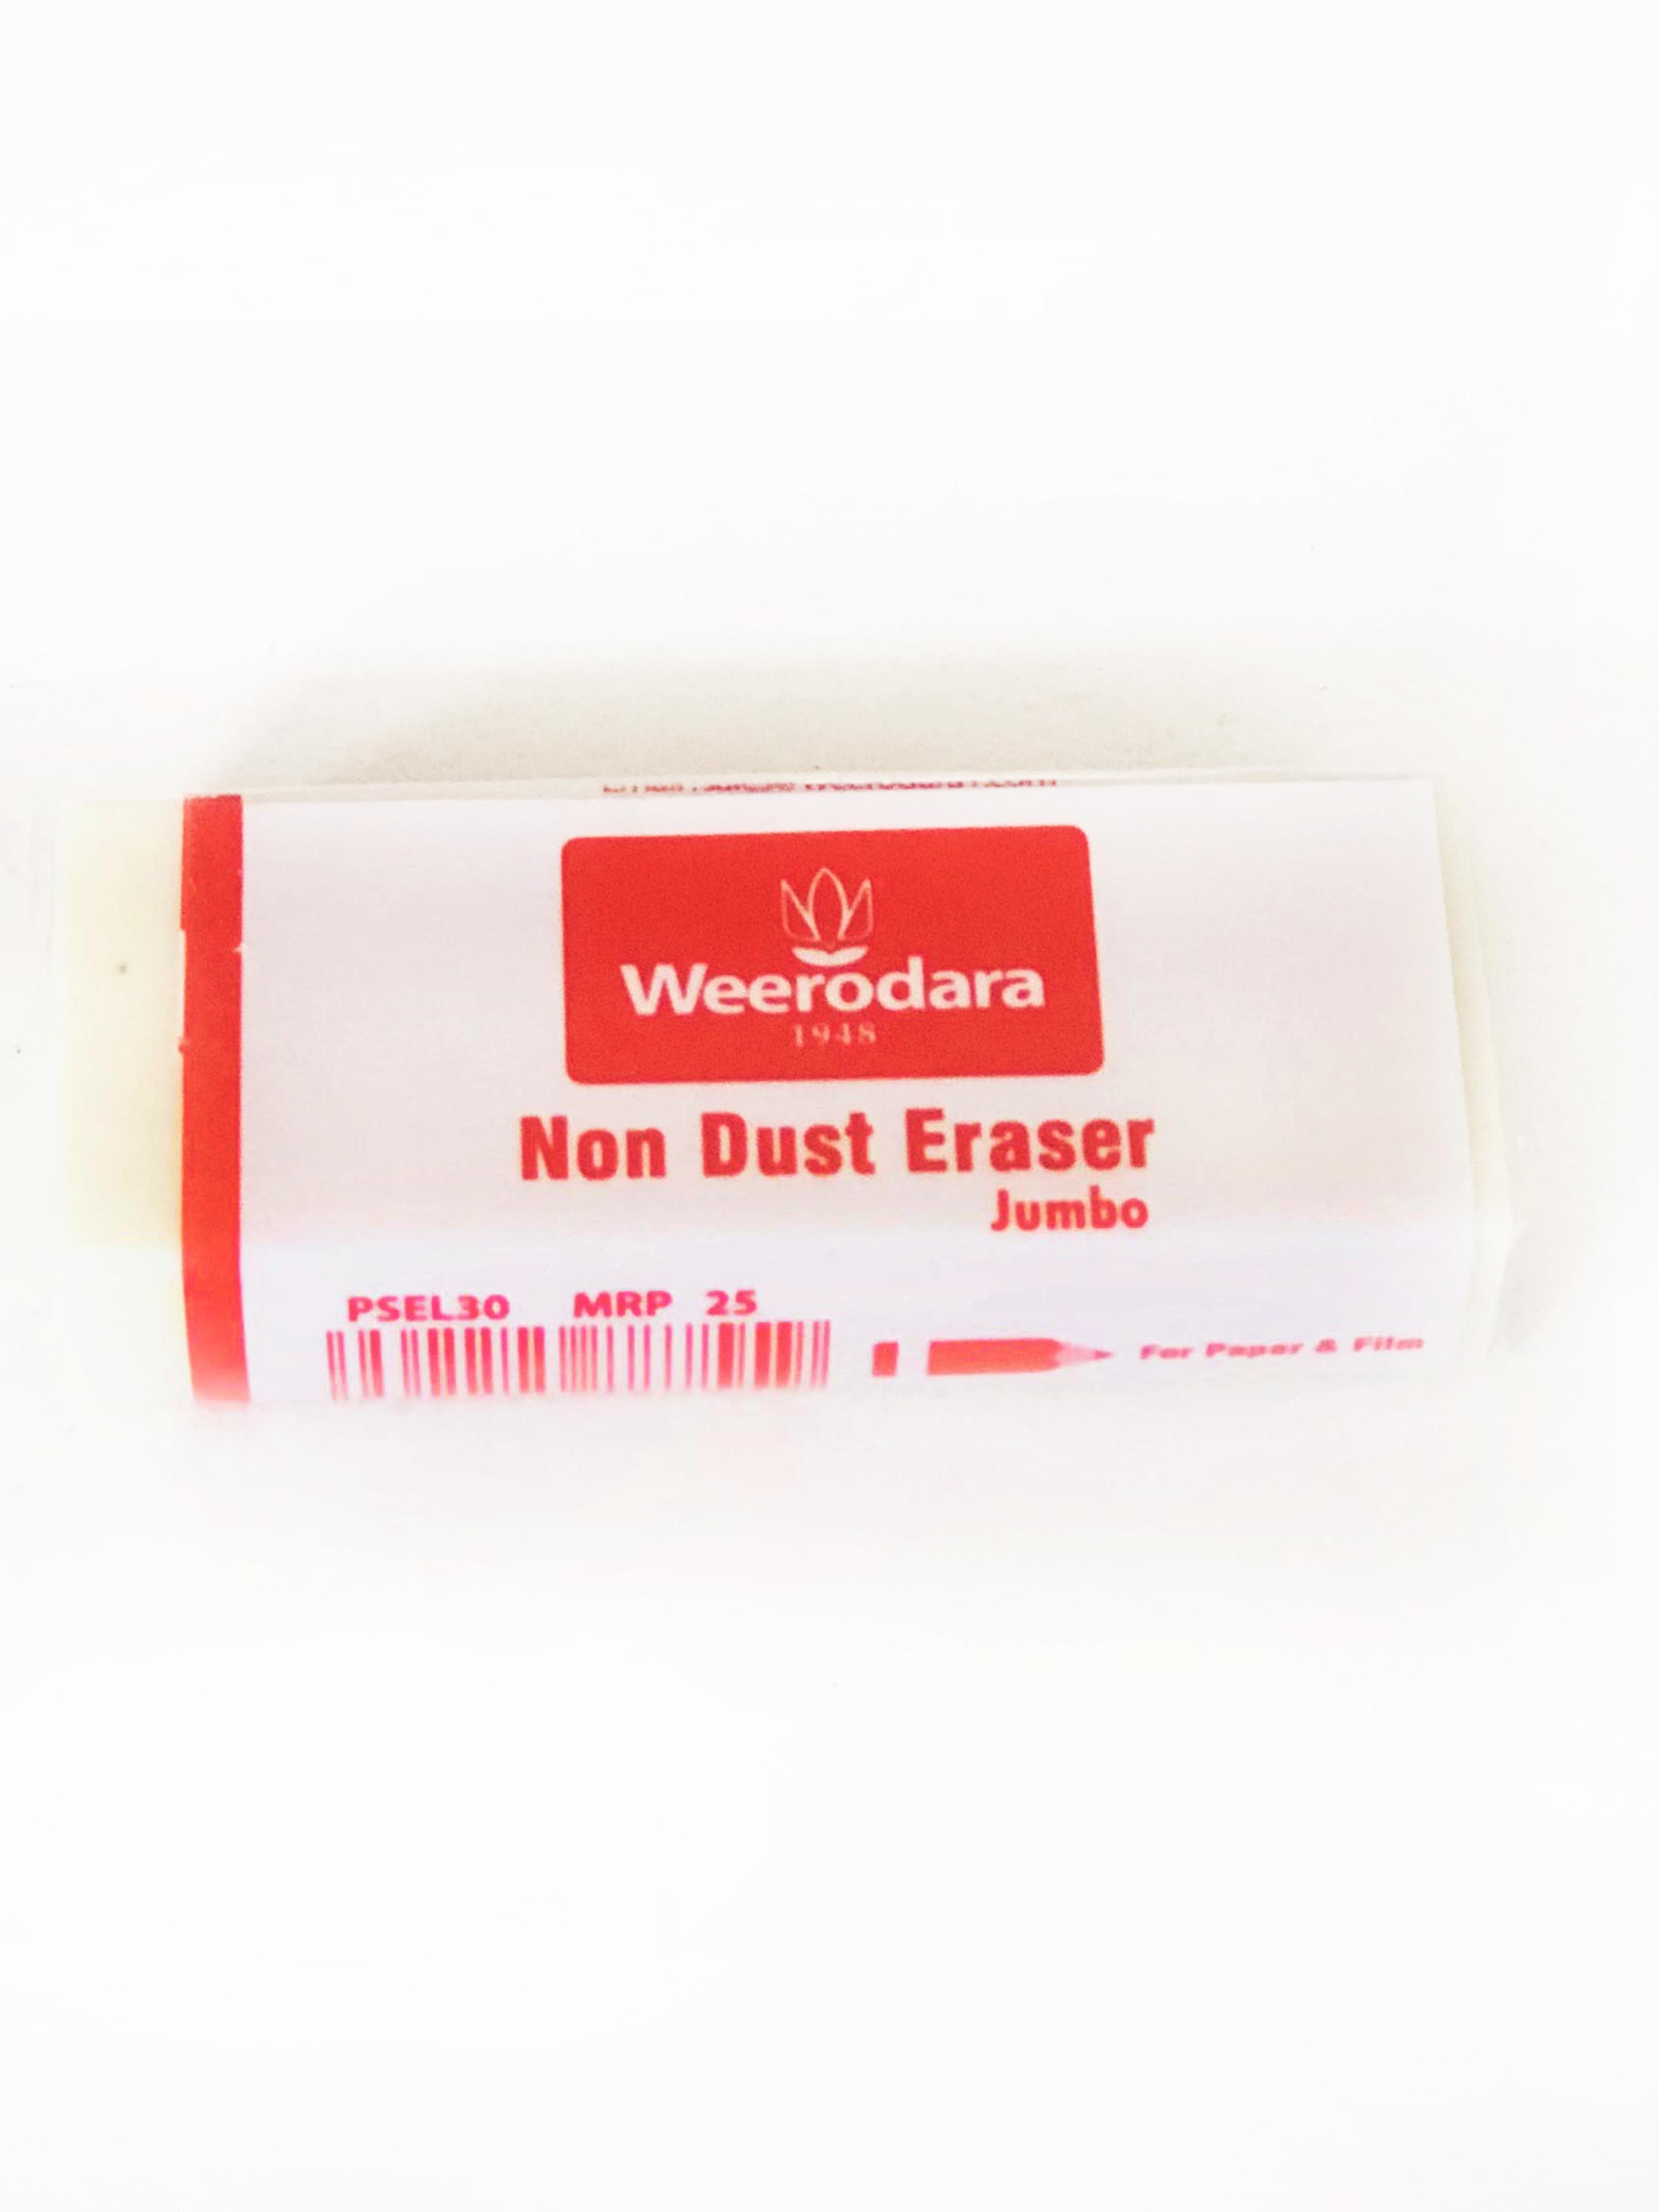 Weerodara Non Dust Eraser Jumbo - Large PSEL30